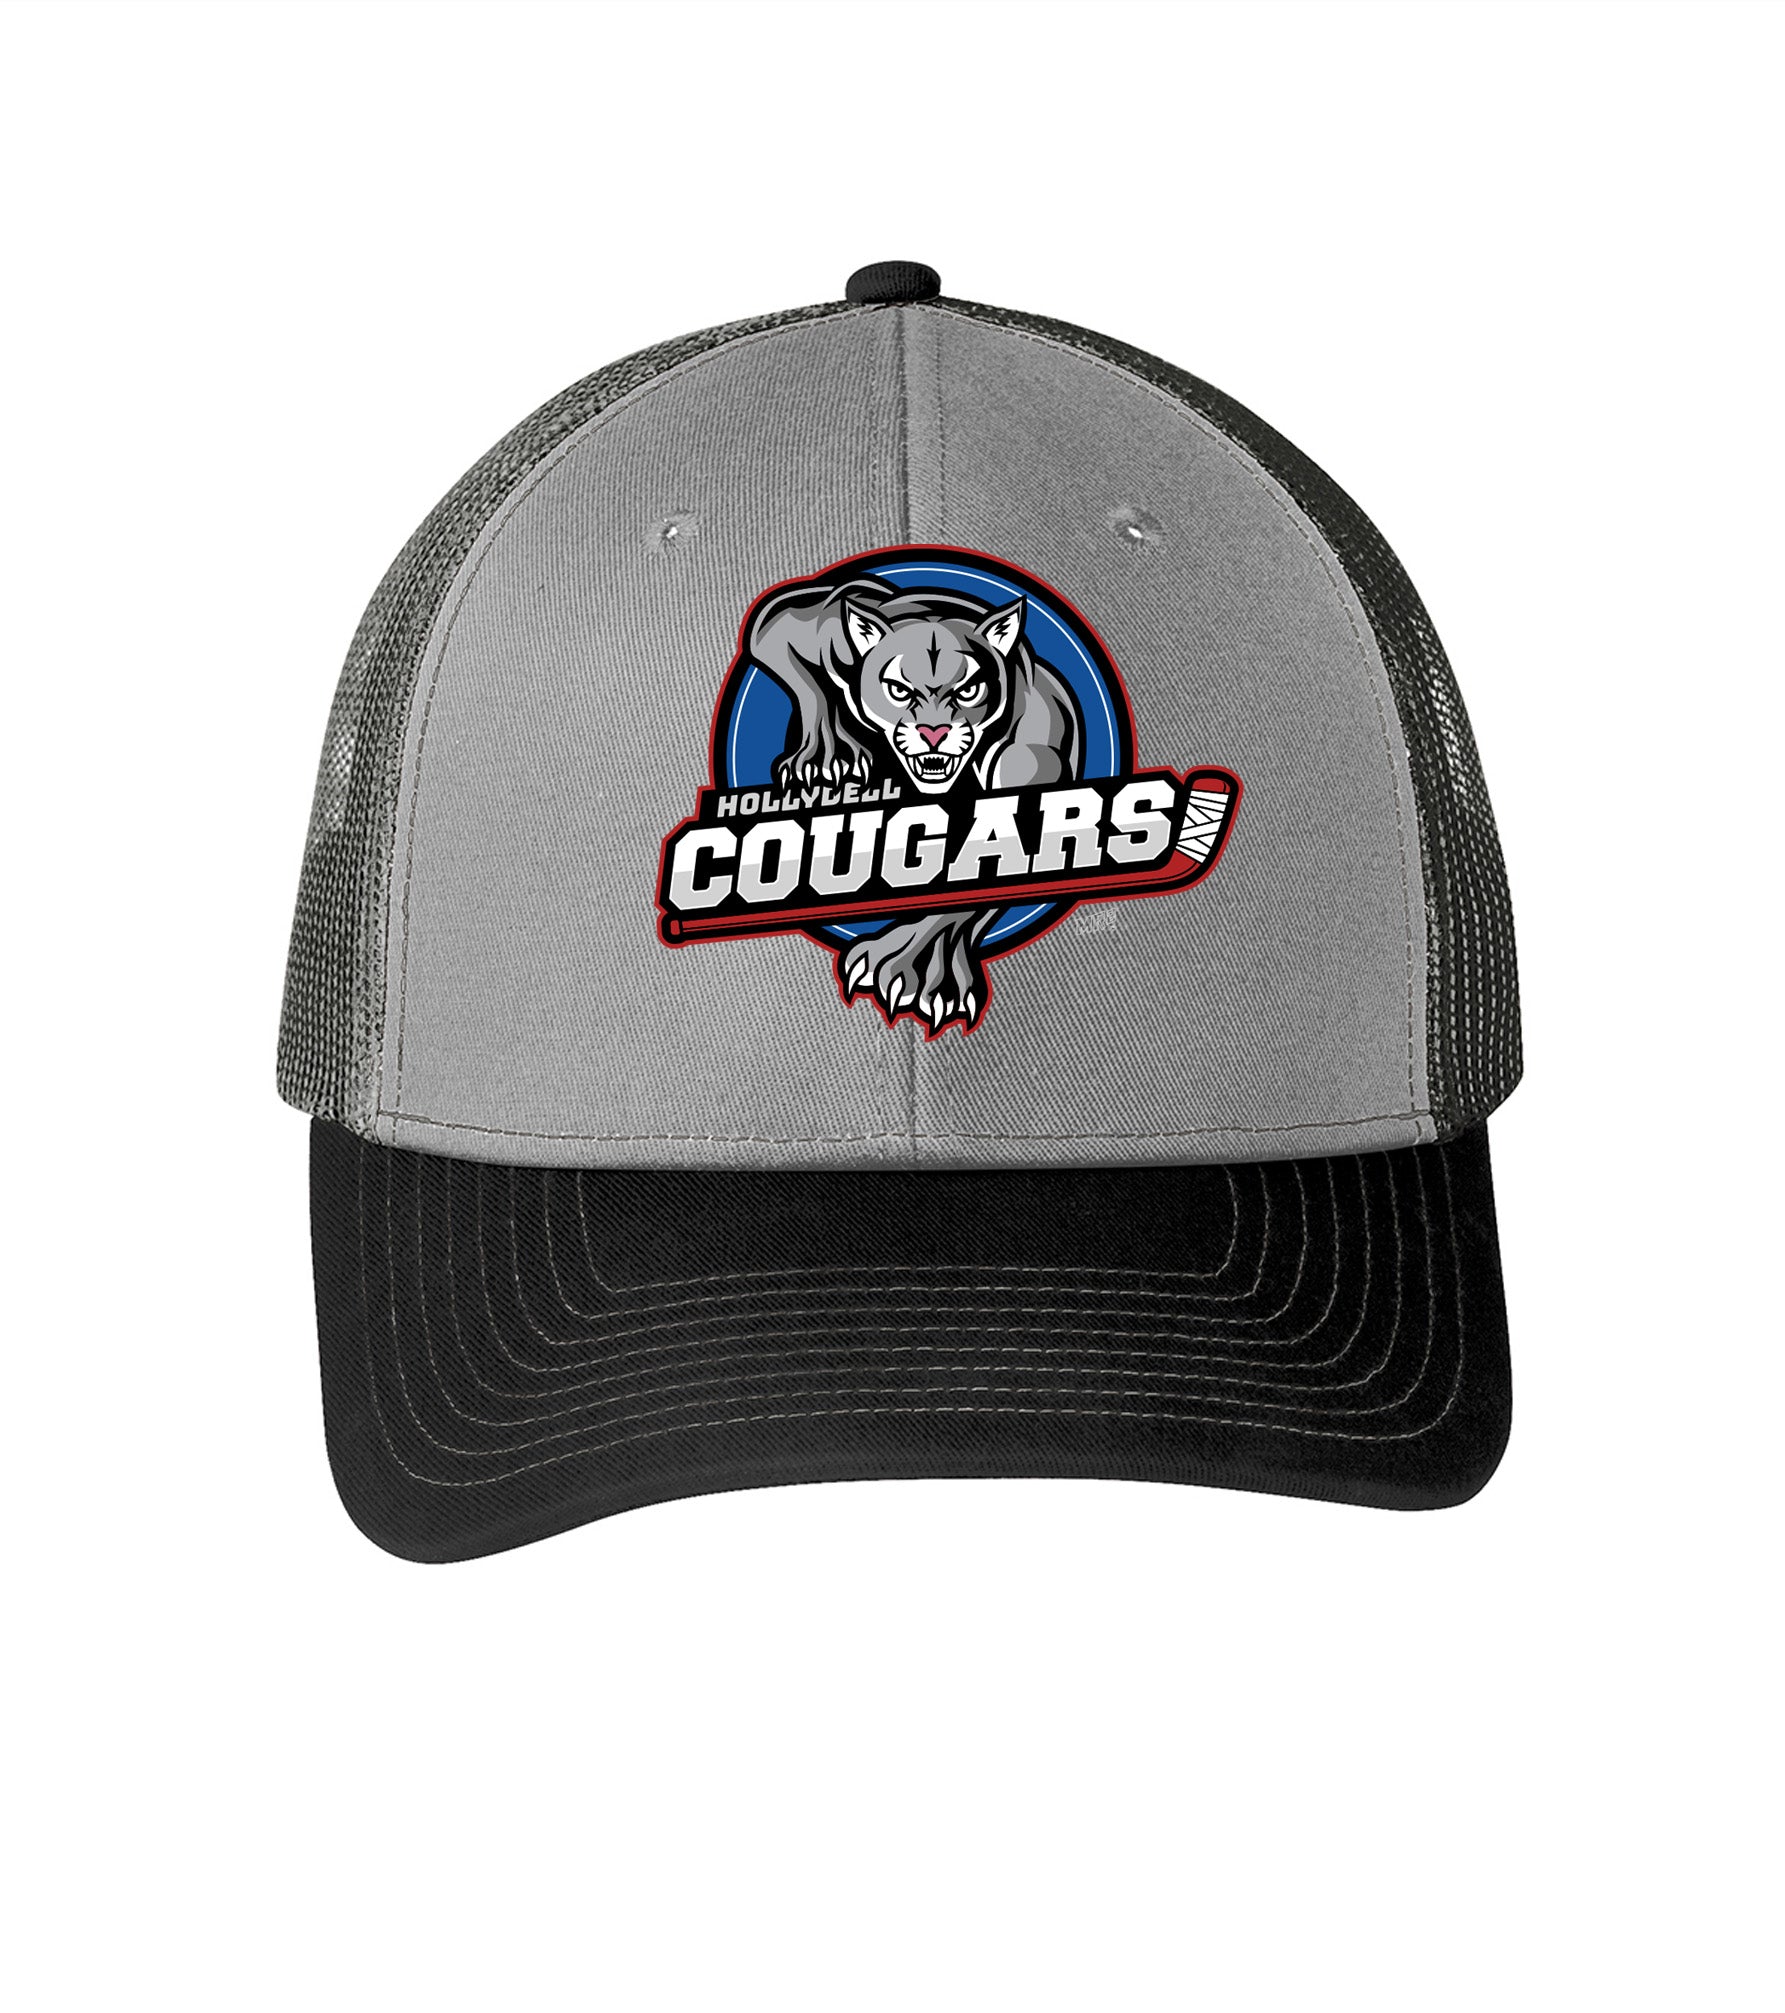 Cougars Trucker Hat - Gray/Black